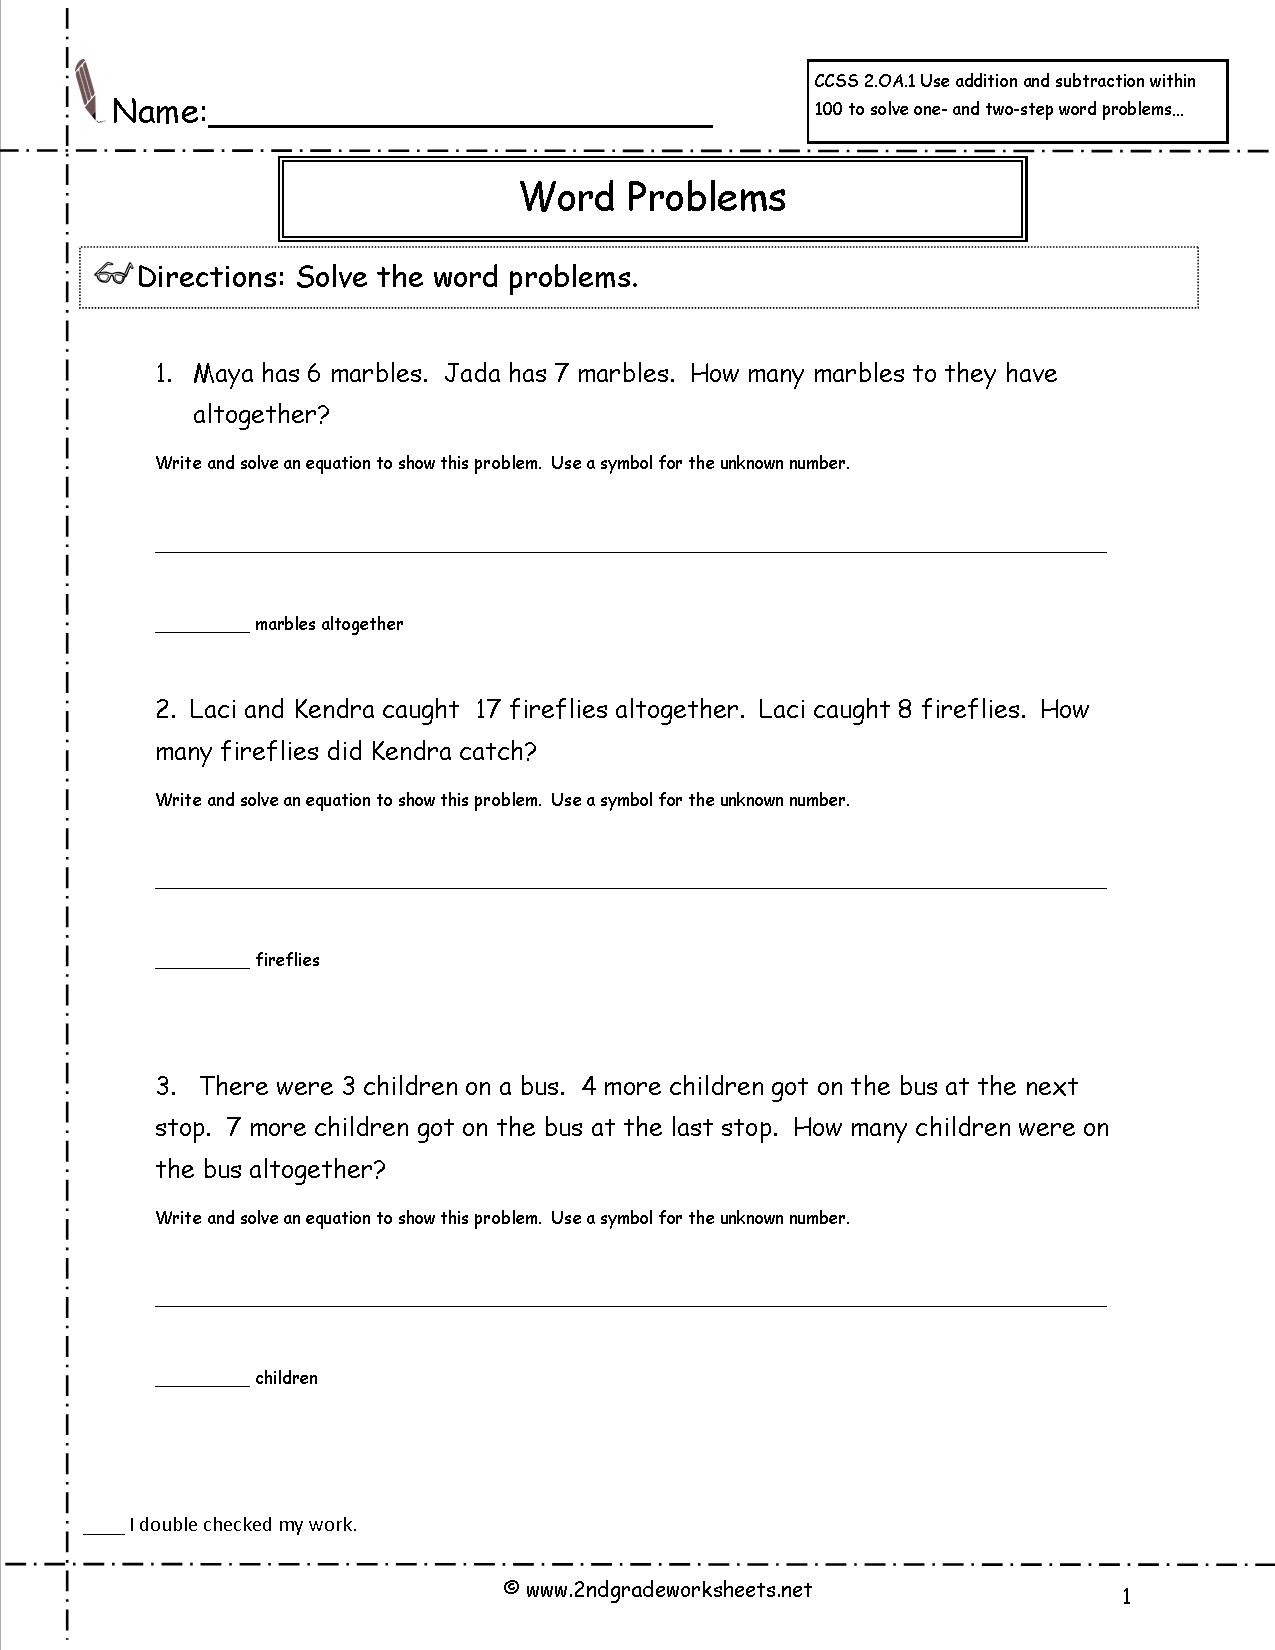 printable-second-grade-math-word-problem-worksheets